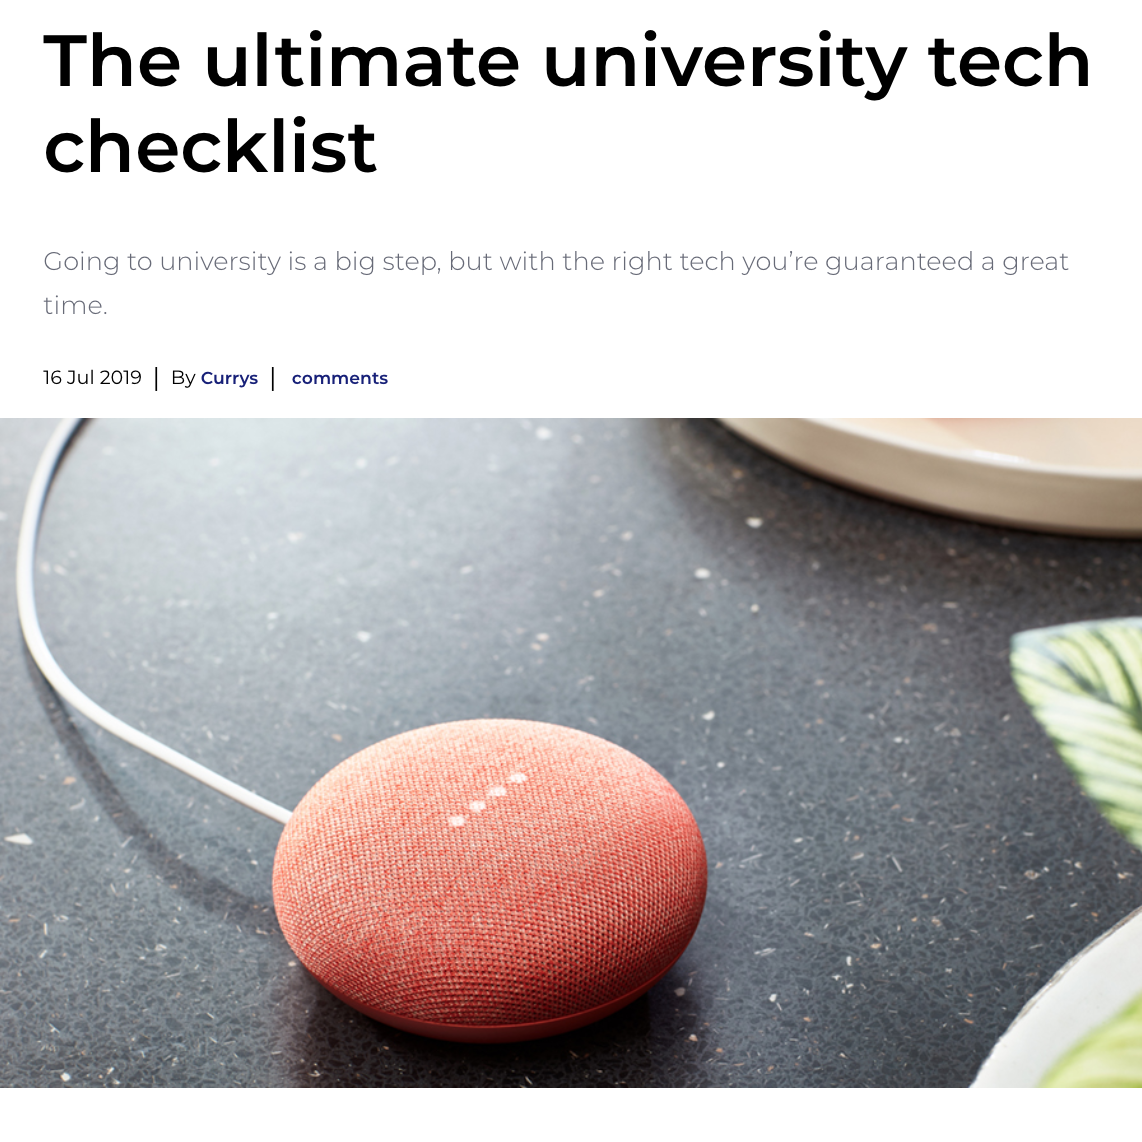 University tech checklist for Currys PC World